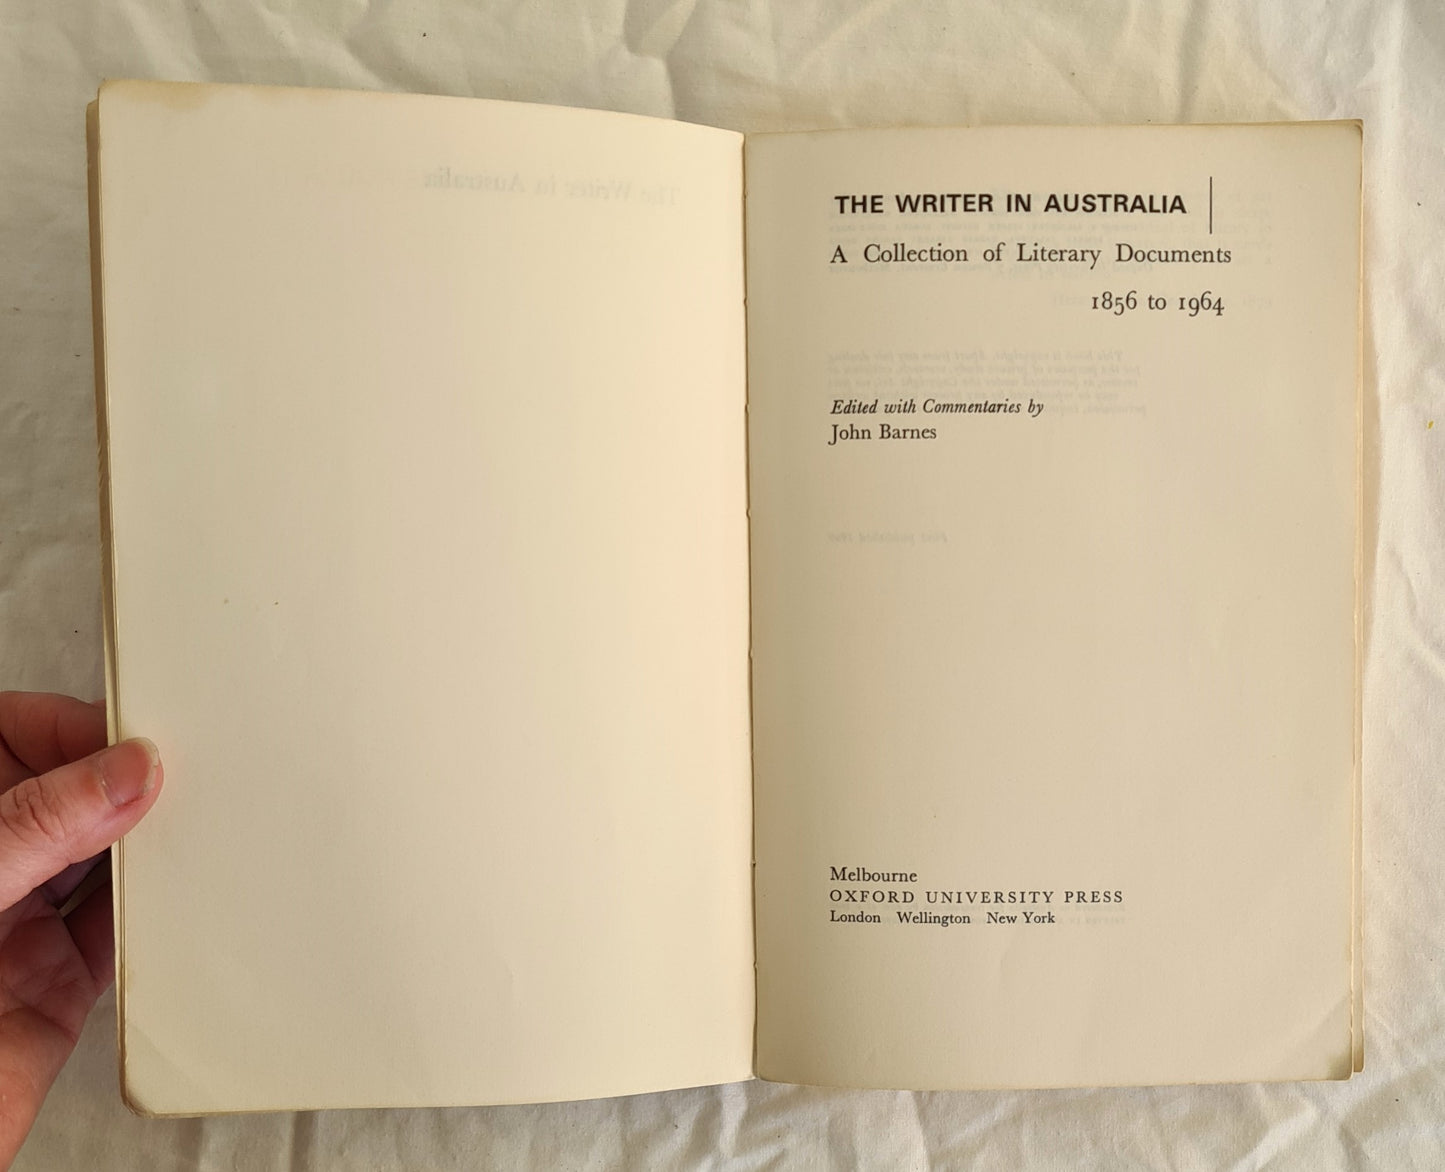 The Writer in Australia by John Barnes